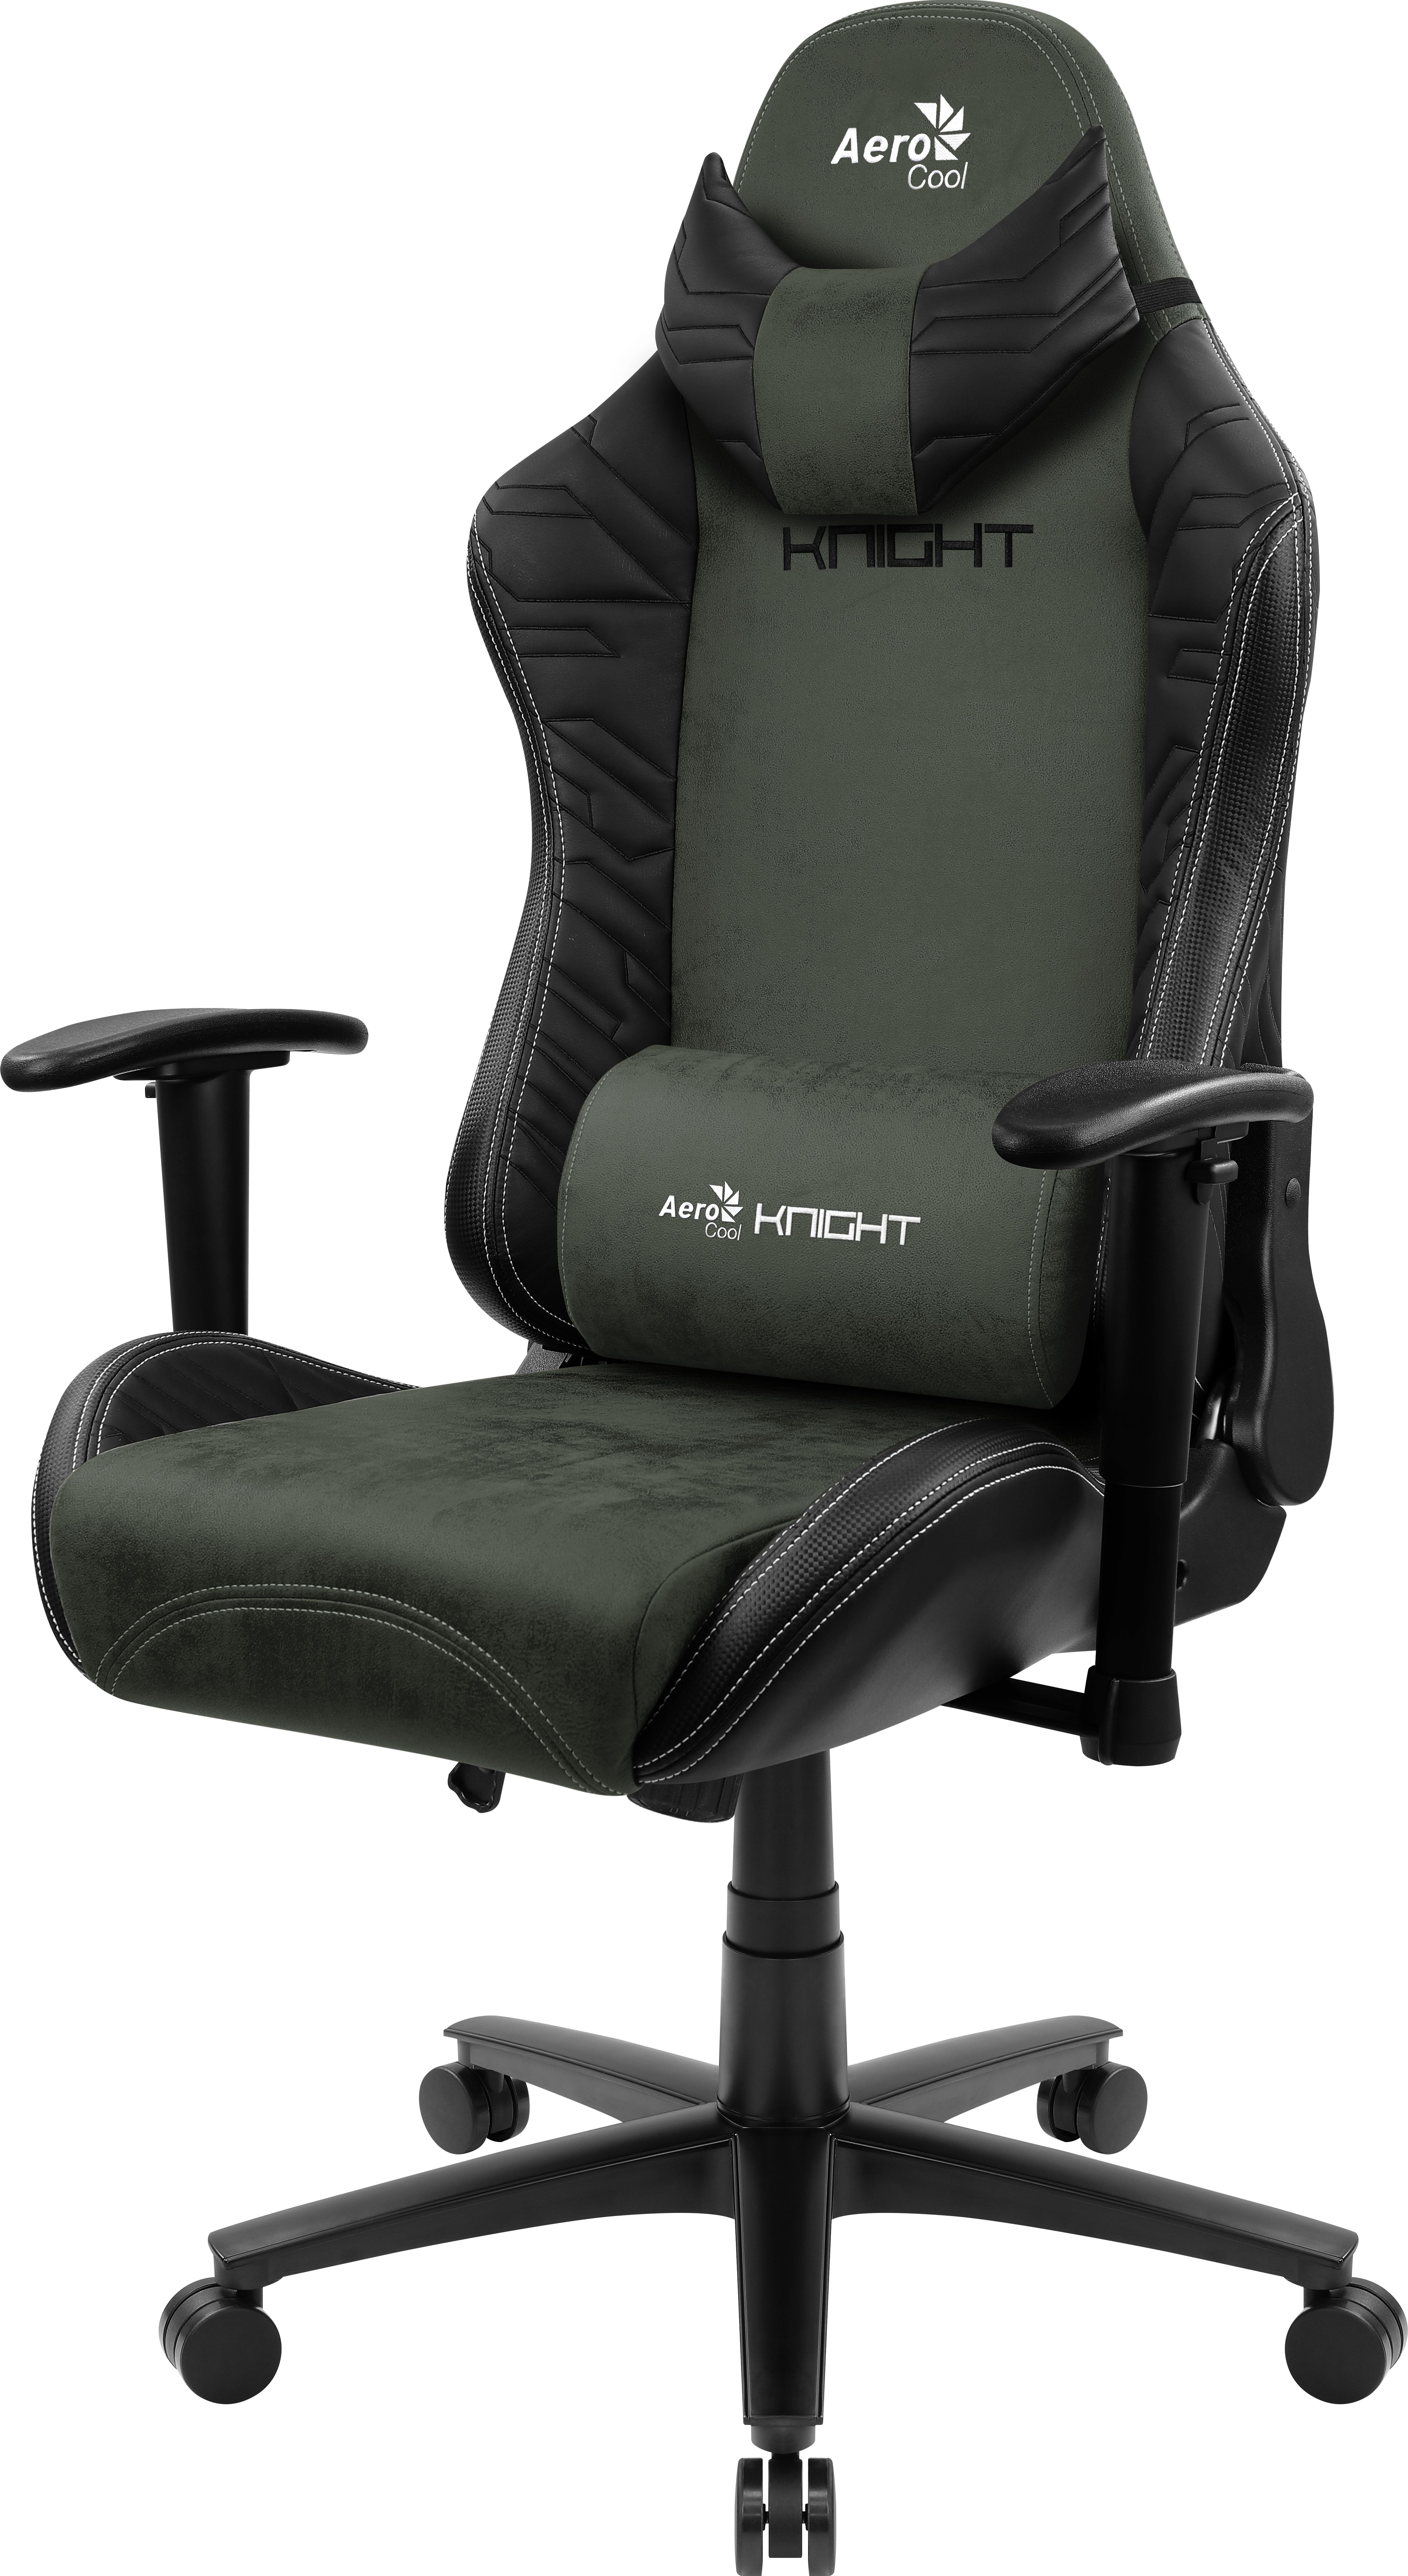 Aerocool KNIGHT AeroSuede Universal gaming chair Black, Green_3